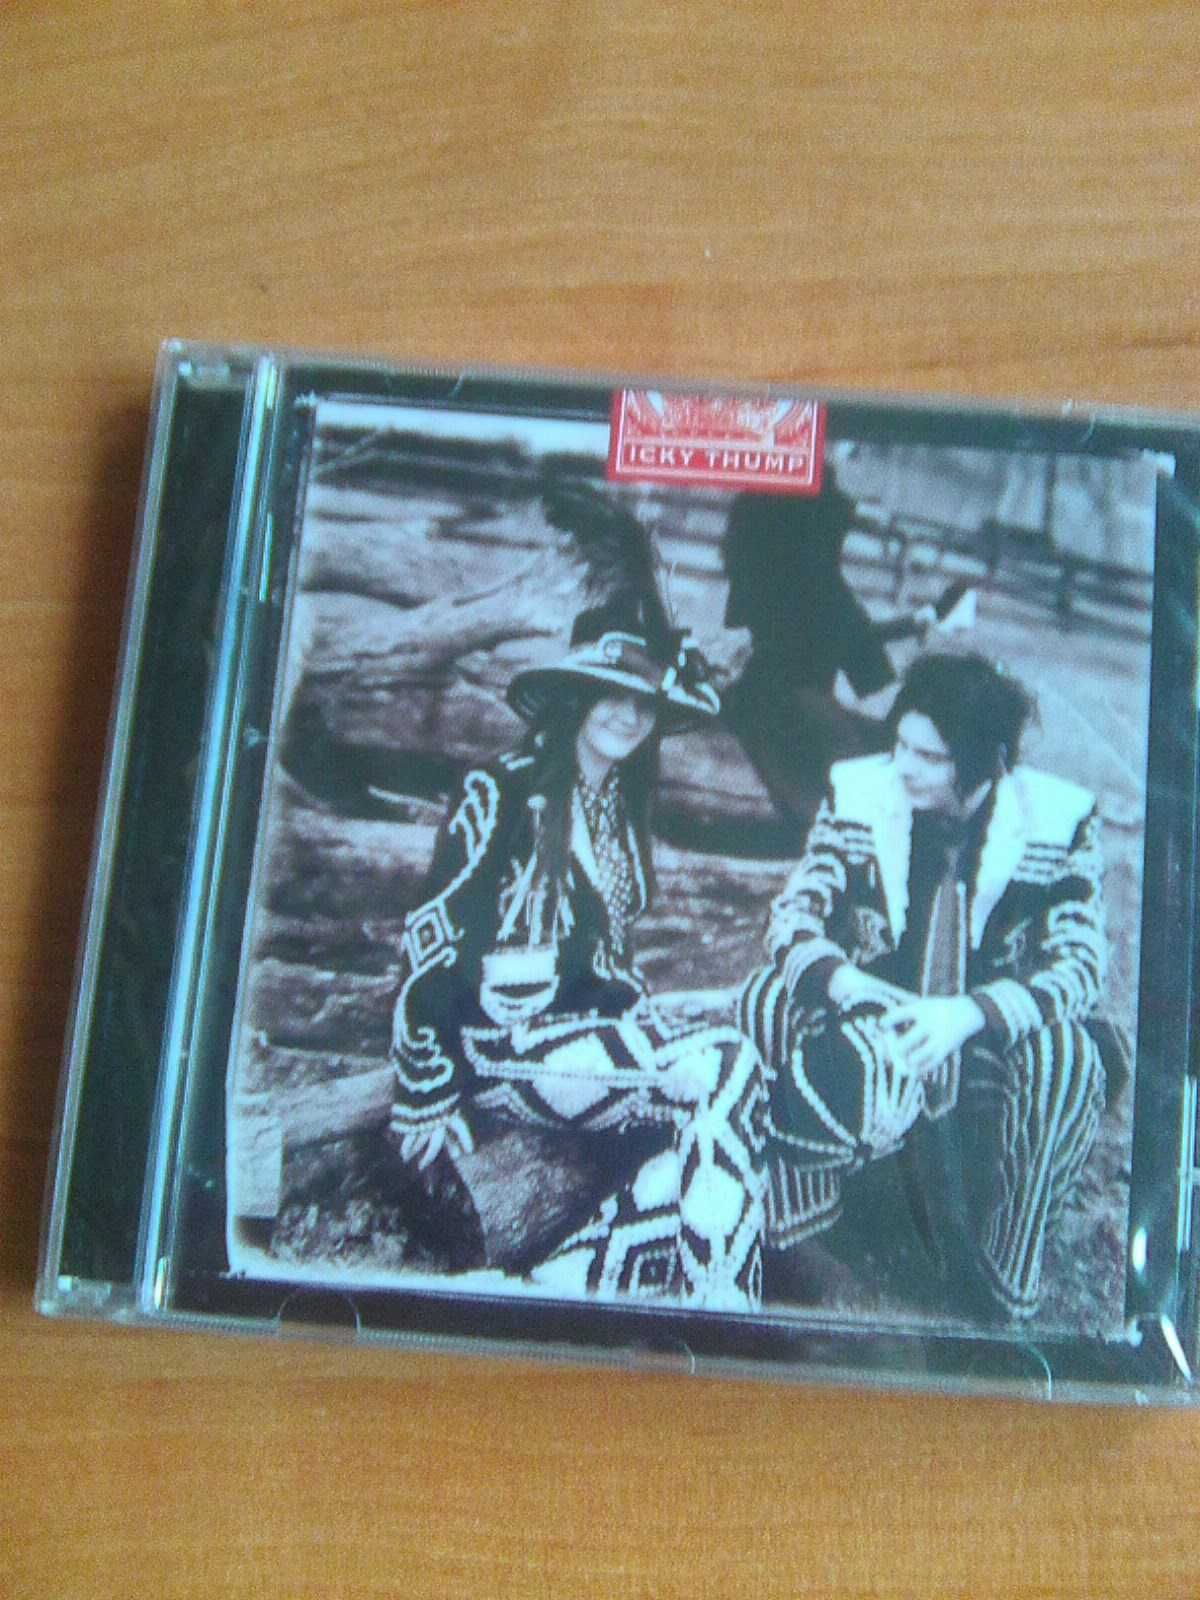 The White Stripes Icky Thump CD